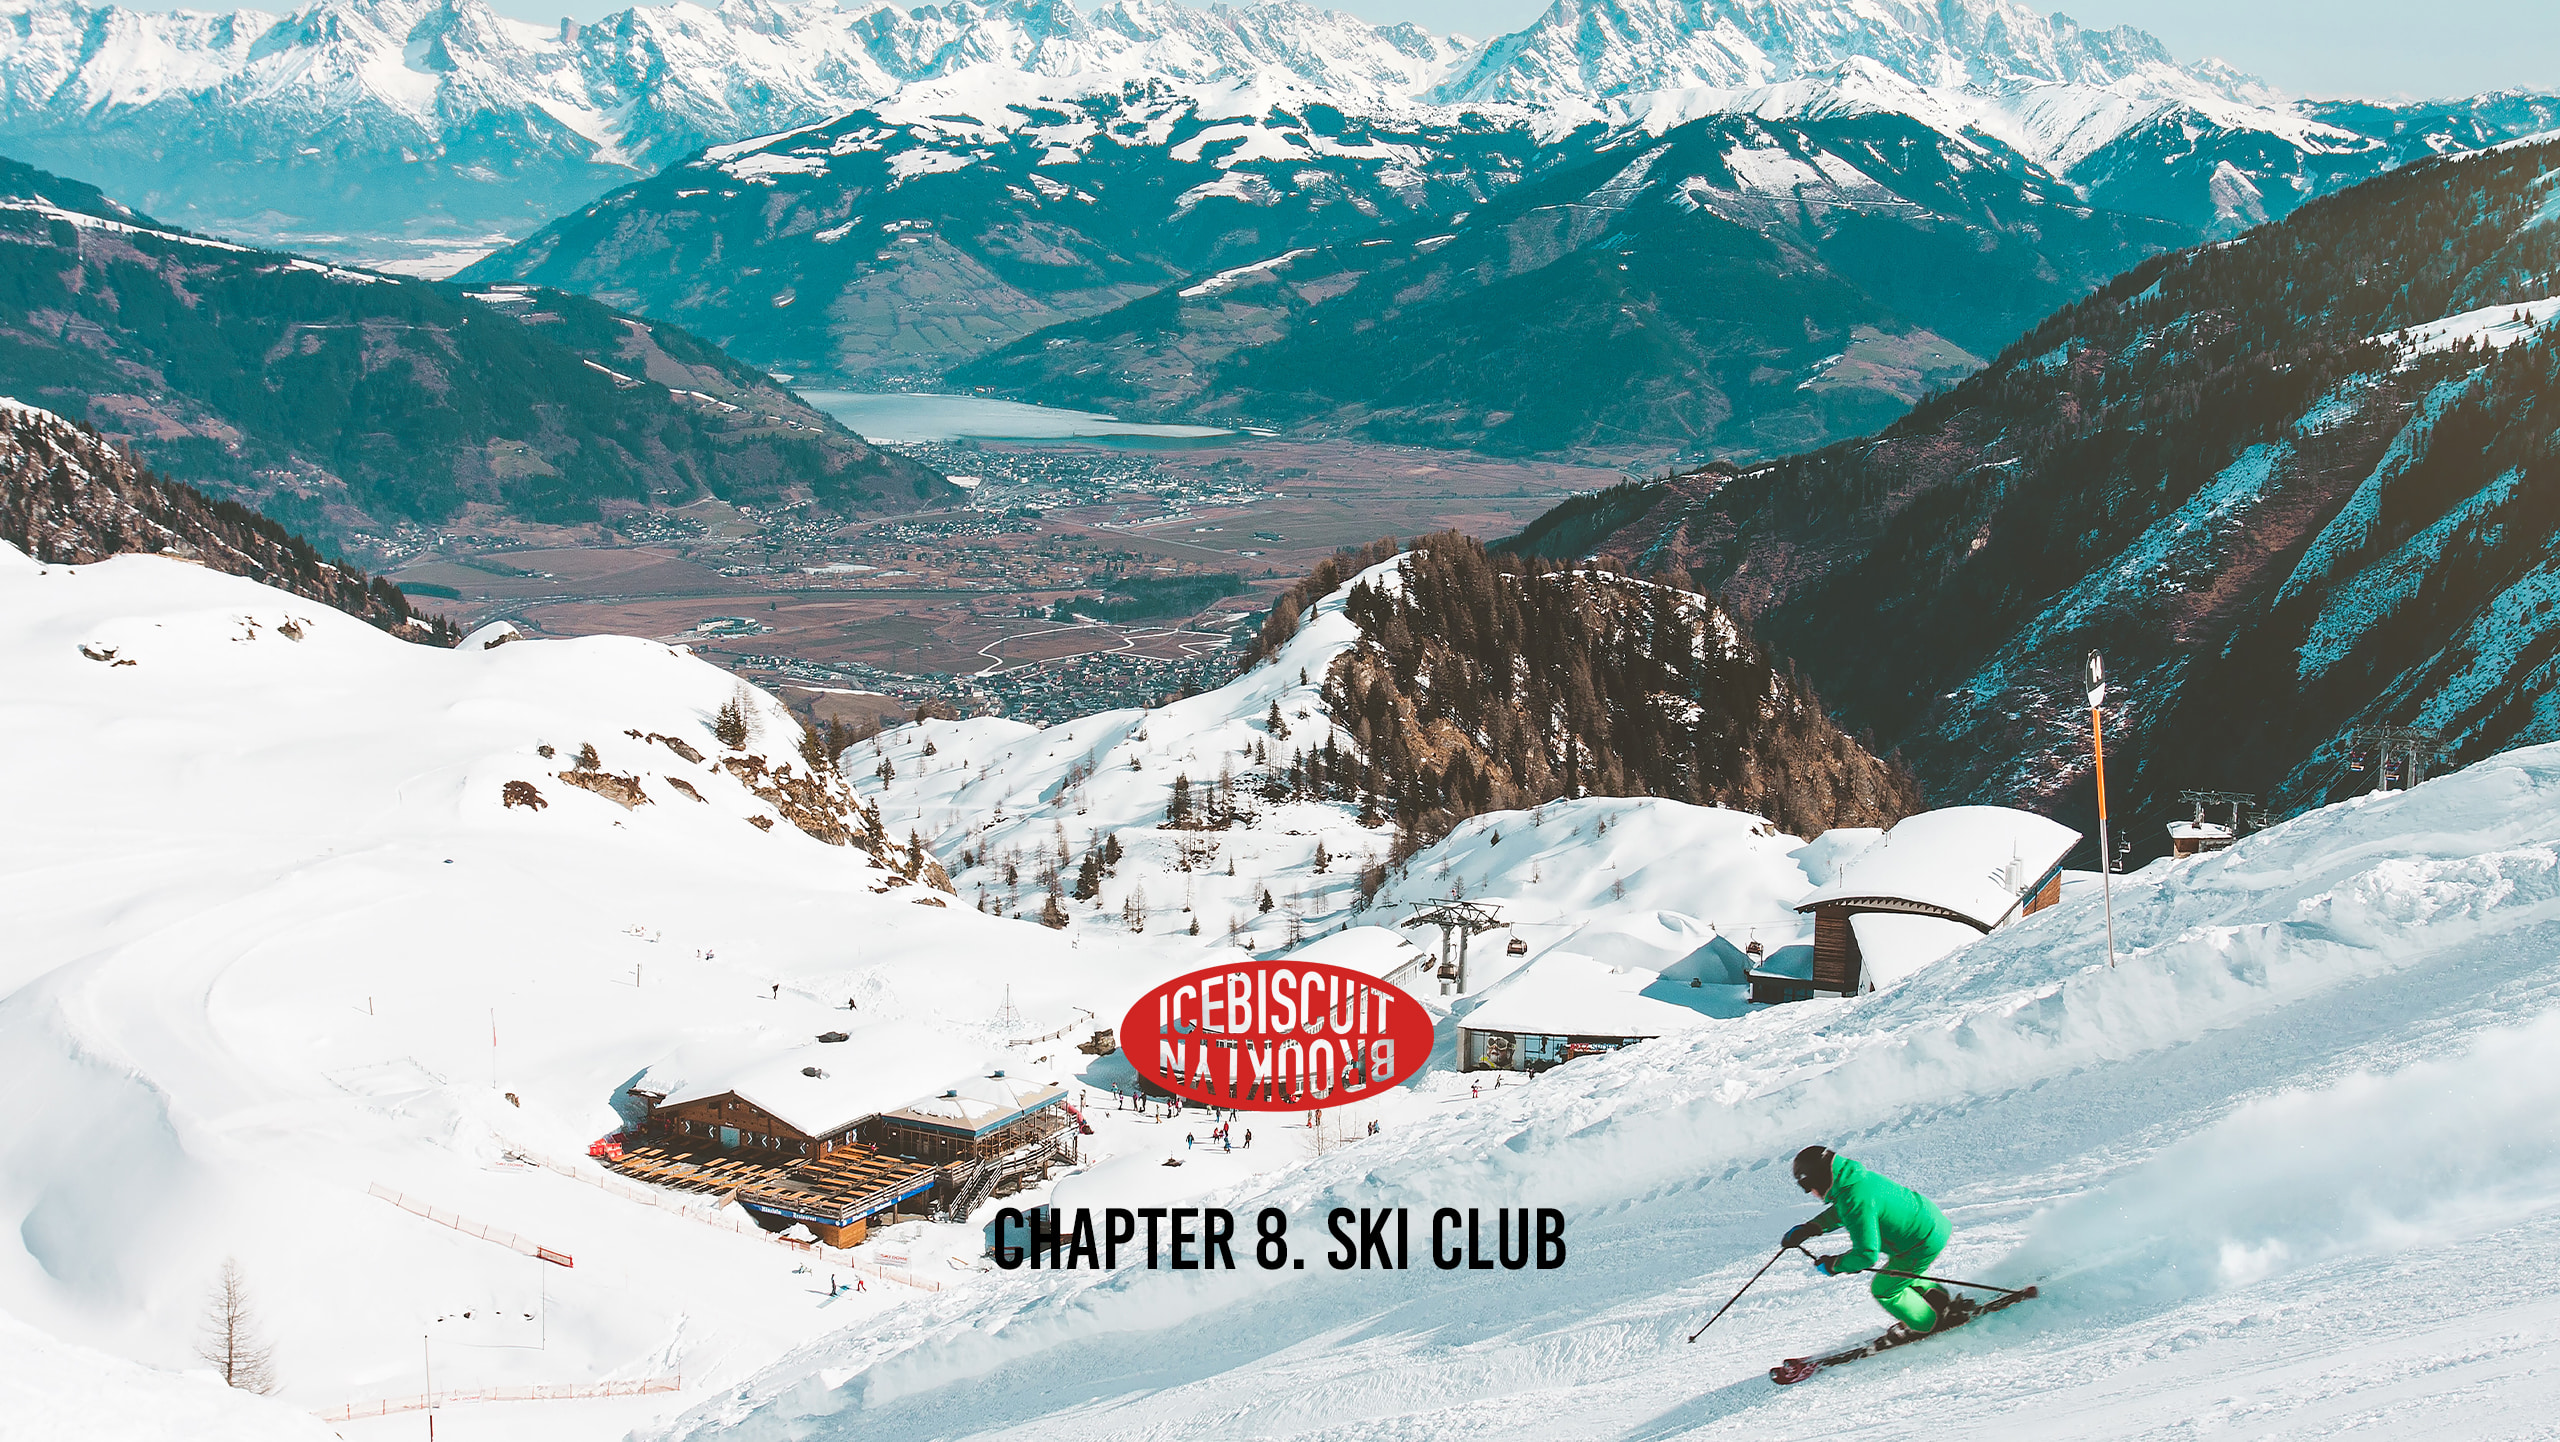 chapter 8. Ski Club